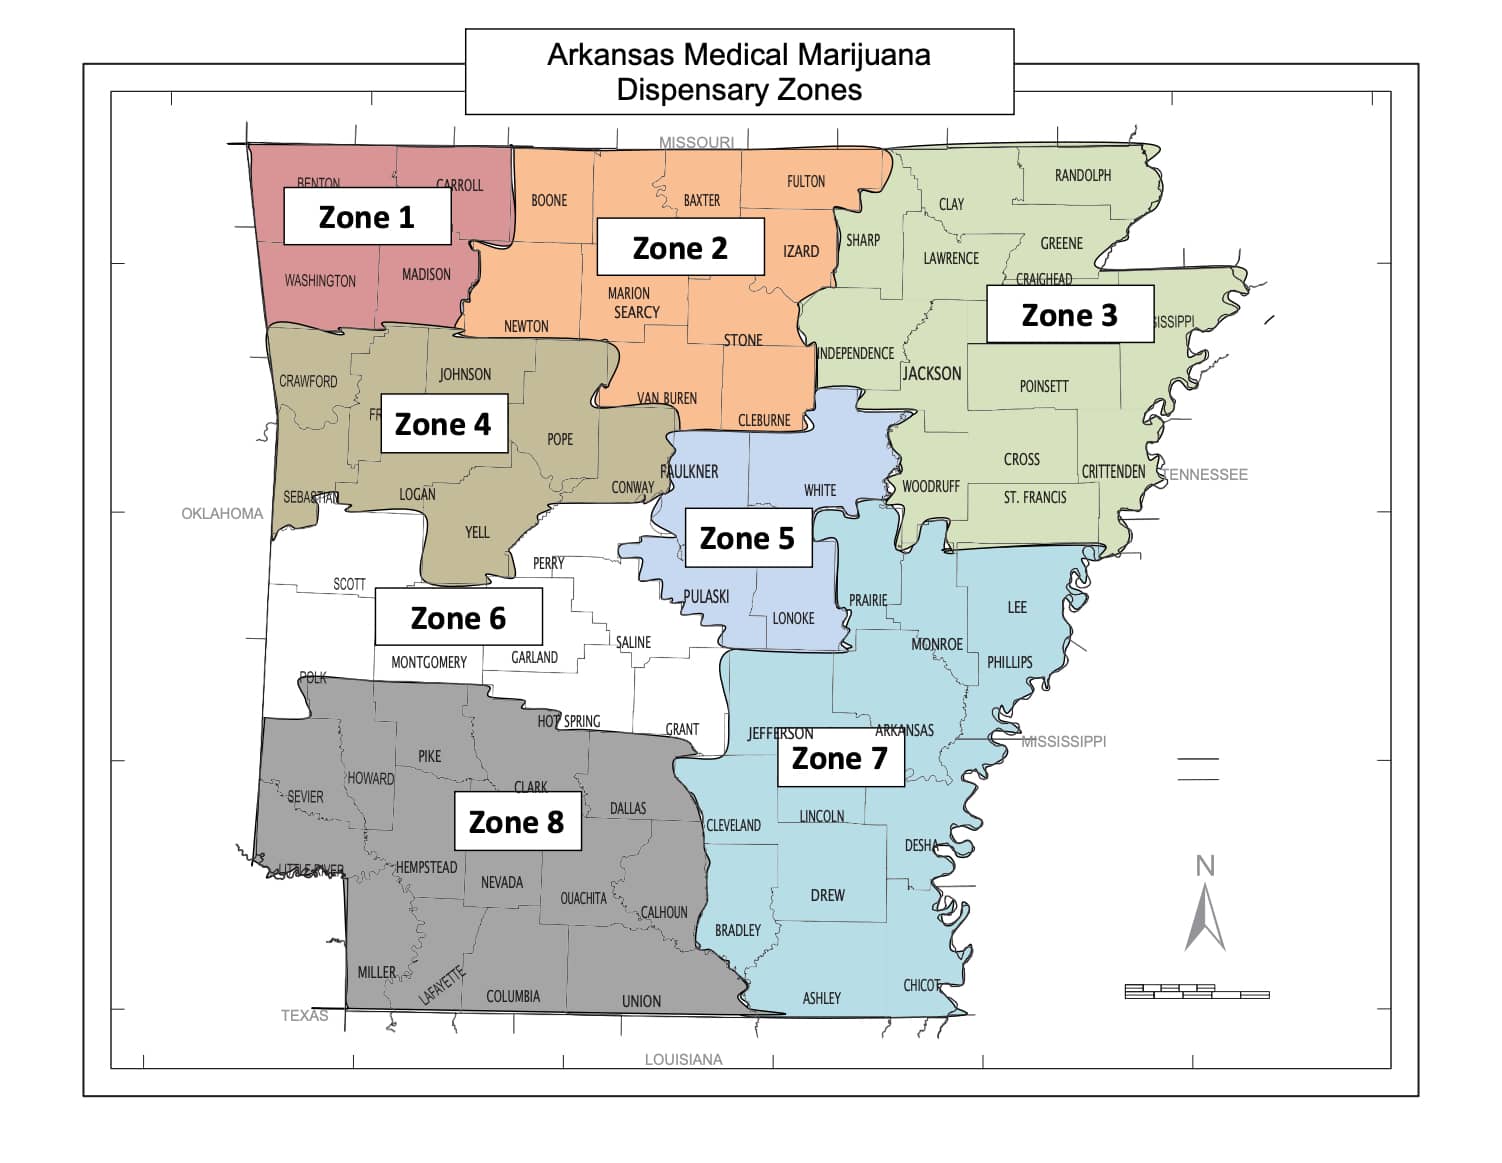 Arkansas Medical Marijuana Dispensary Zones.jpg